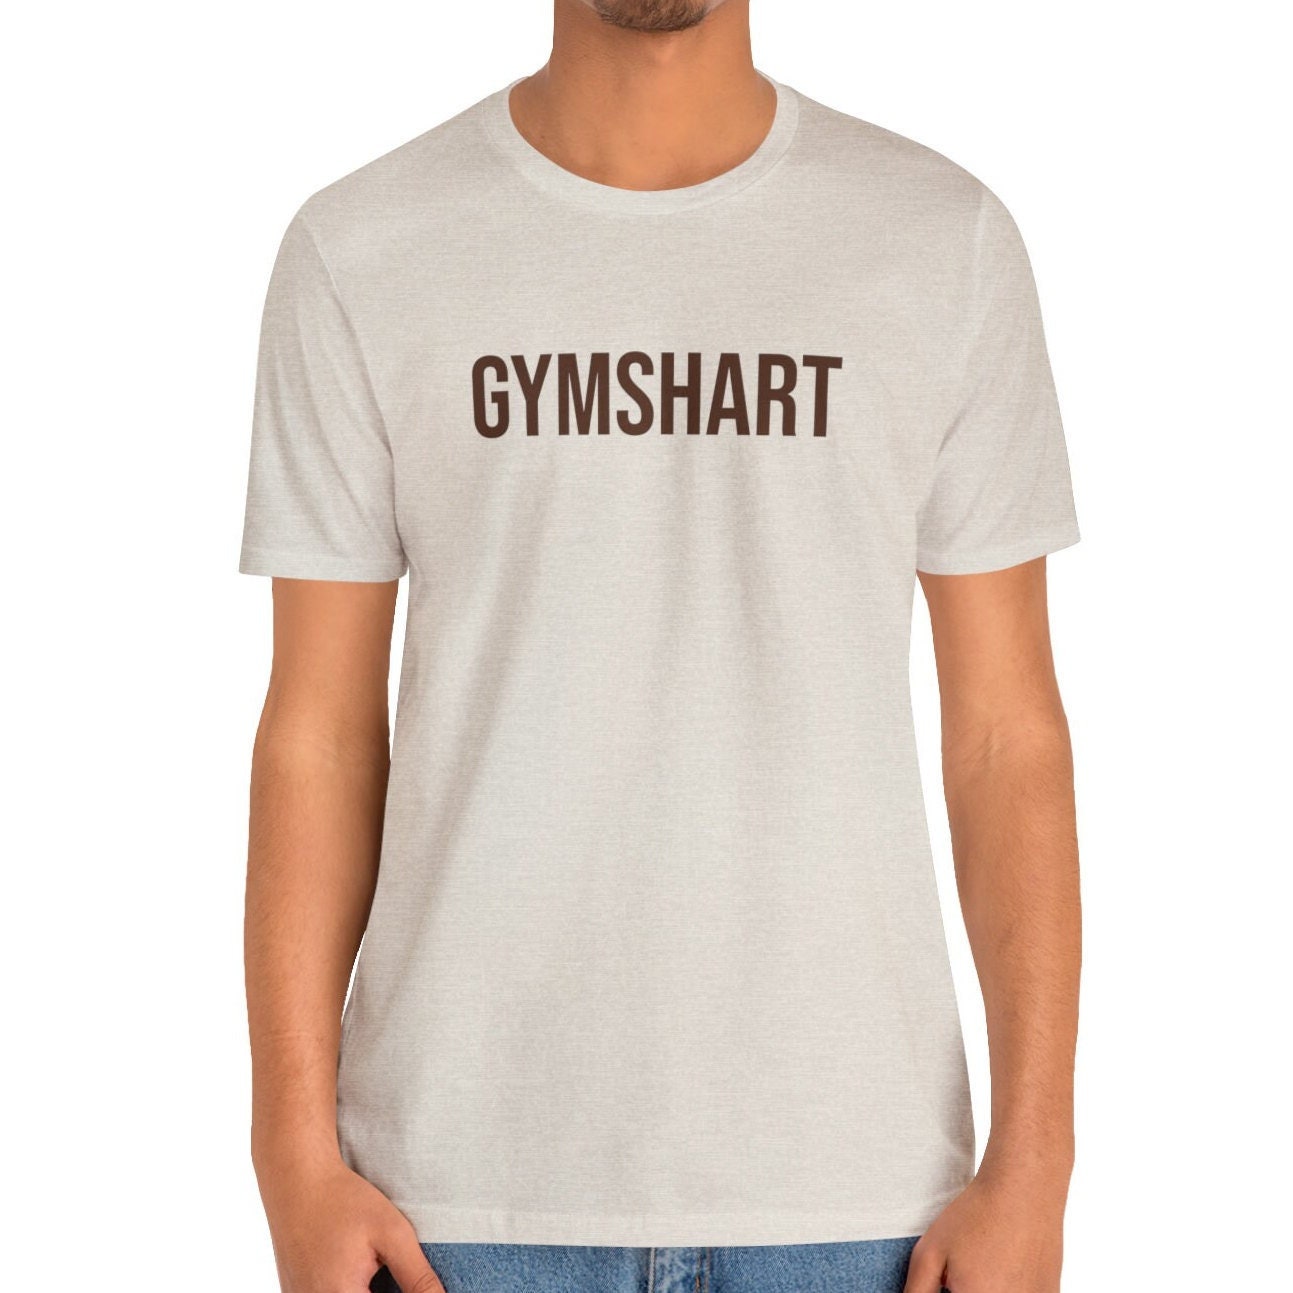 Funny T-shirt gymshart, Gymshark Parody Tee, Meme T-shirt 